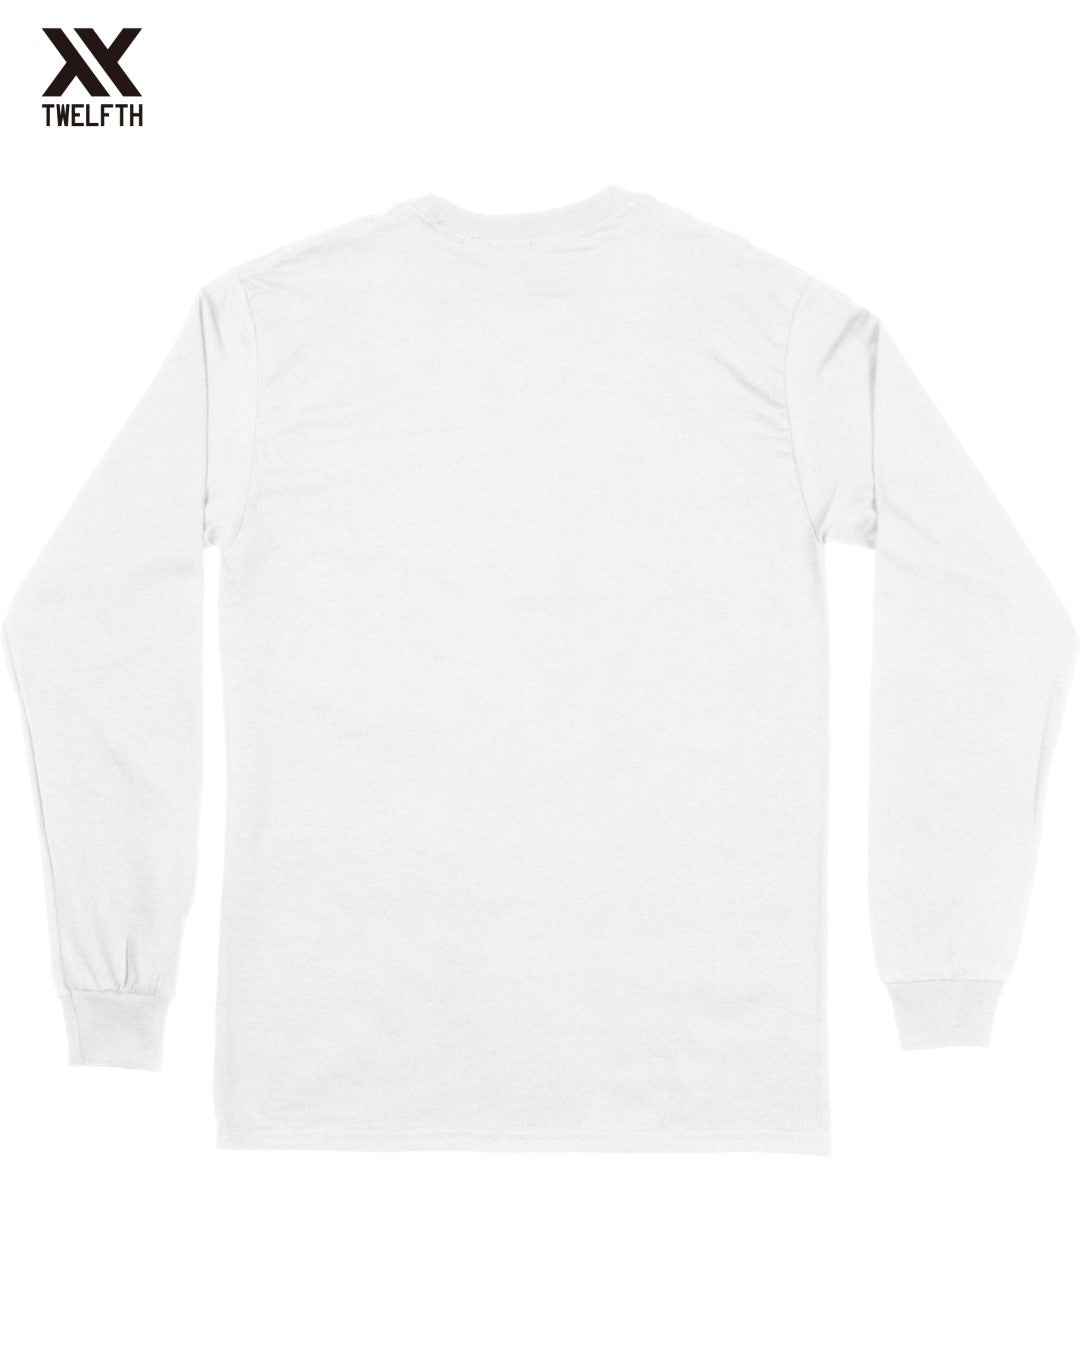 Club America Crest T-Shirt - Mens - Long Sleeve